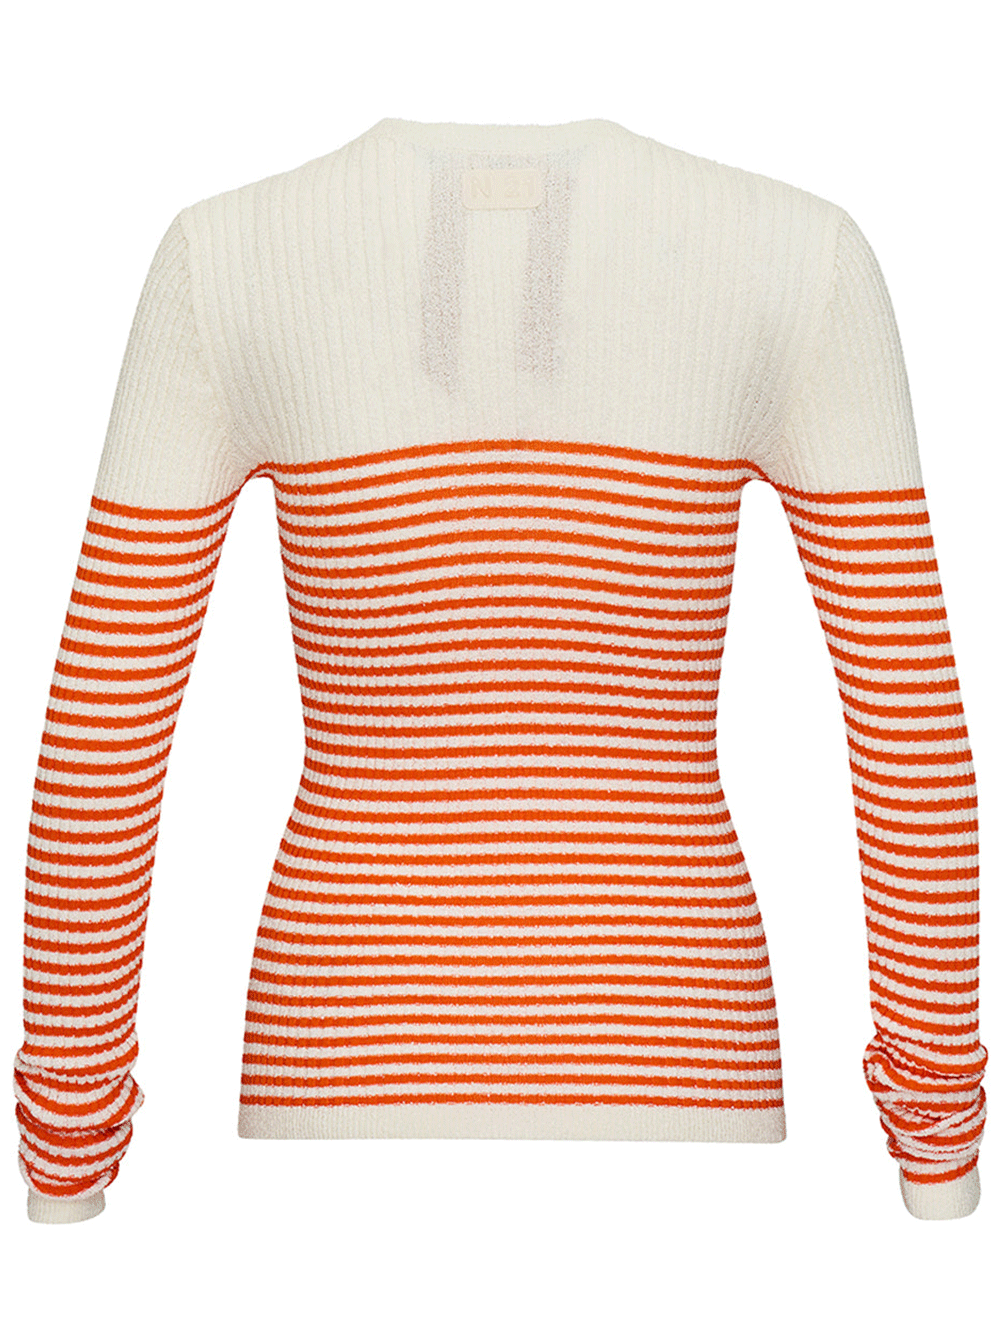 N21-Crew-Neck-Sweater-Stripes-Stripes-2